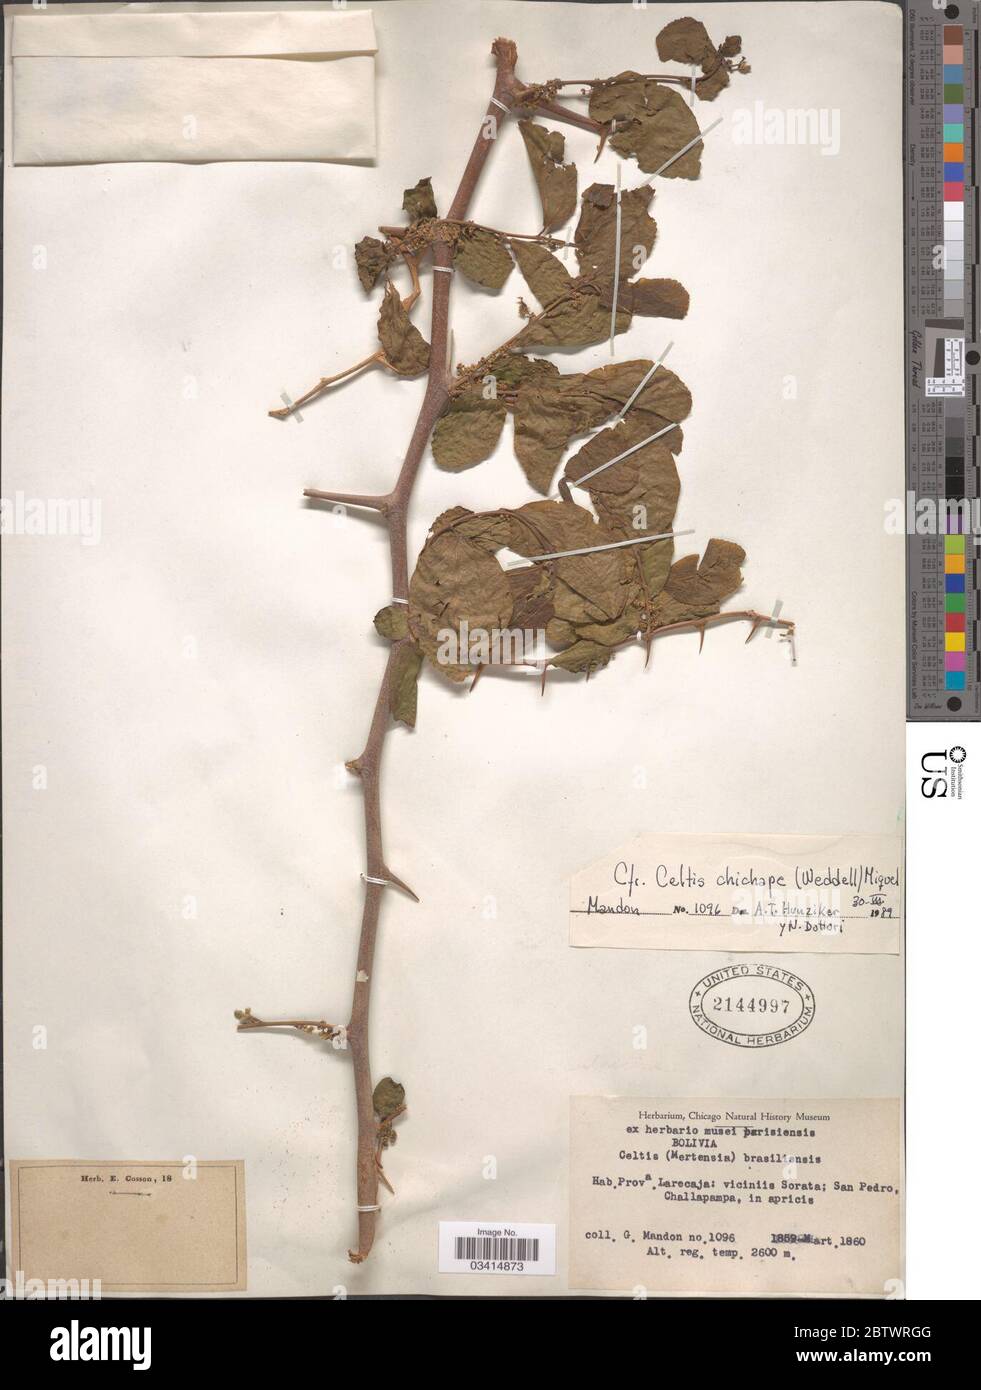 Celtis pubescens var chichape Wedd Baehni. Stock Photo